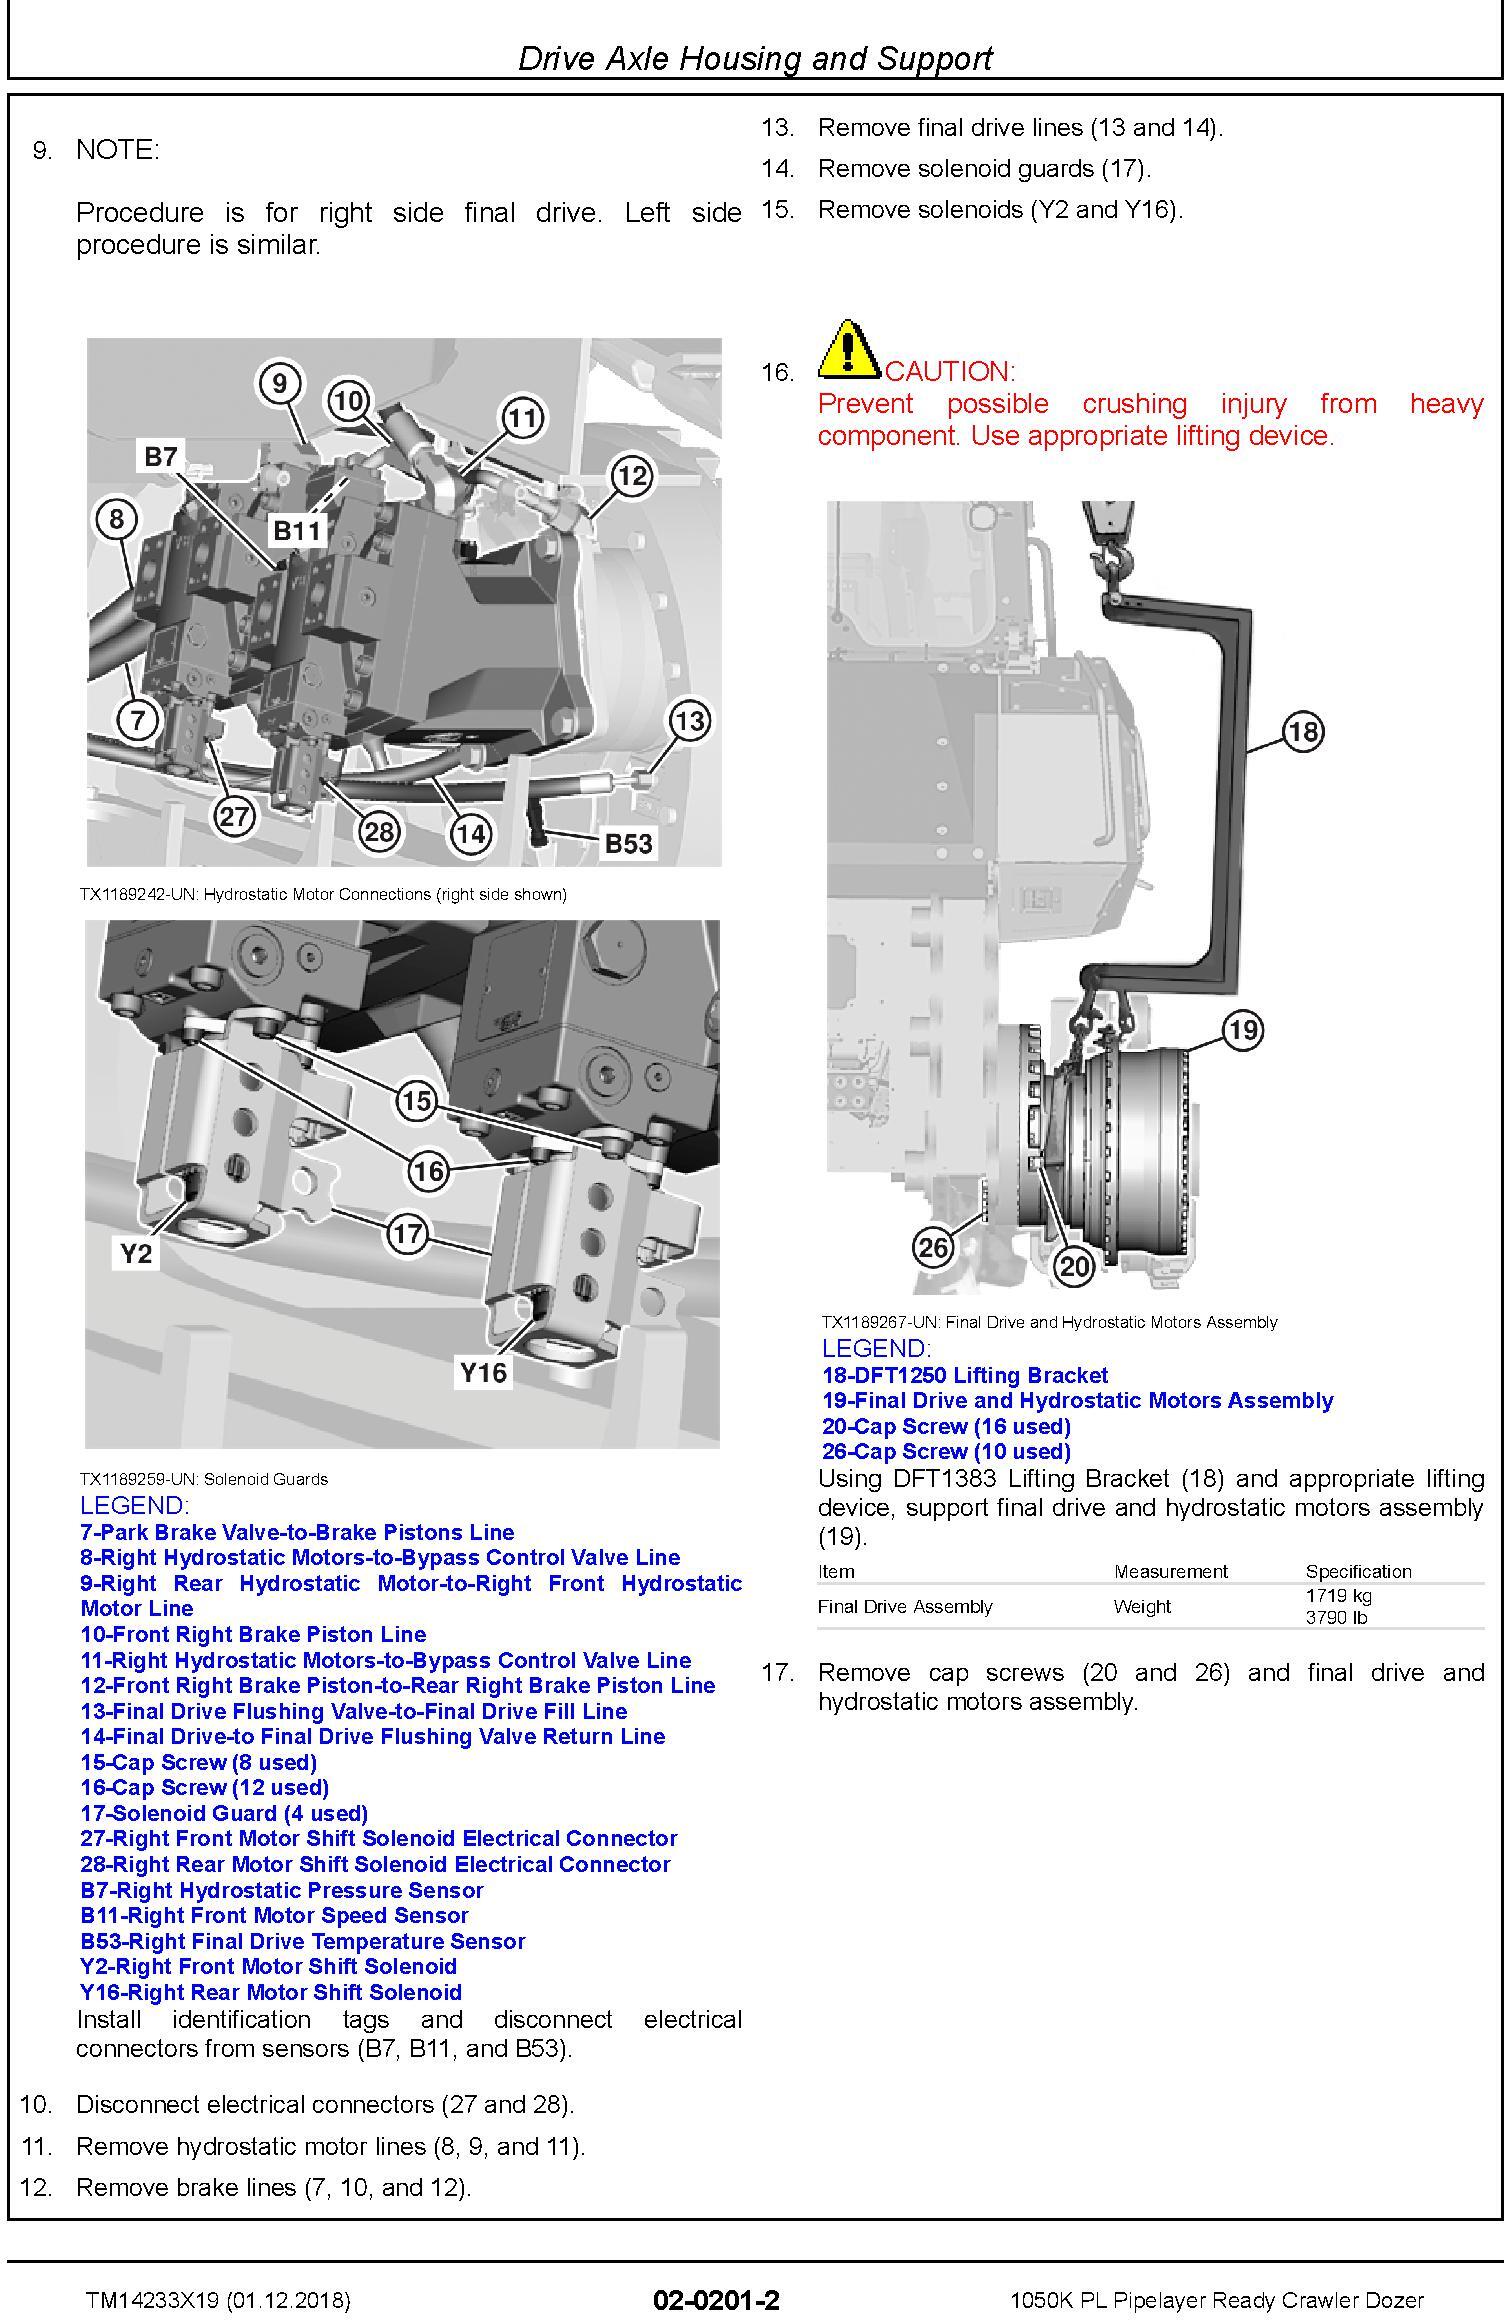 John Deere 1050K PL (SN. F310922-318801) Pipelayer Ready Crawler Dozer Repair Manual (TM14233X19) - 3